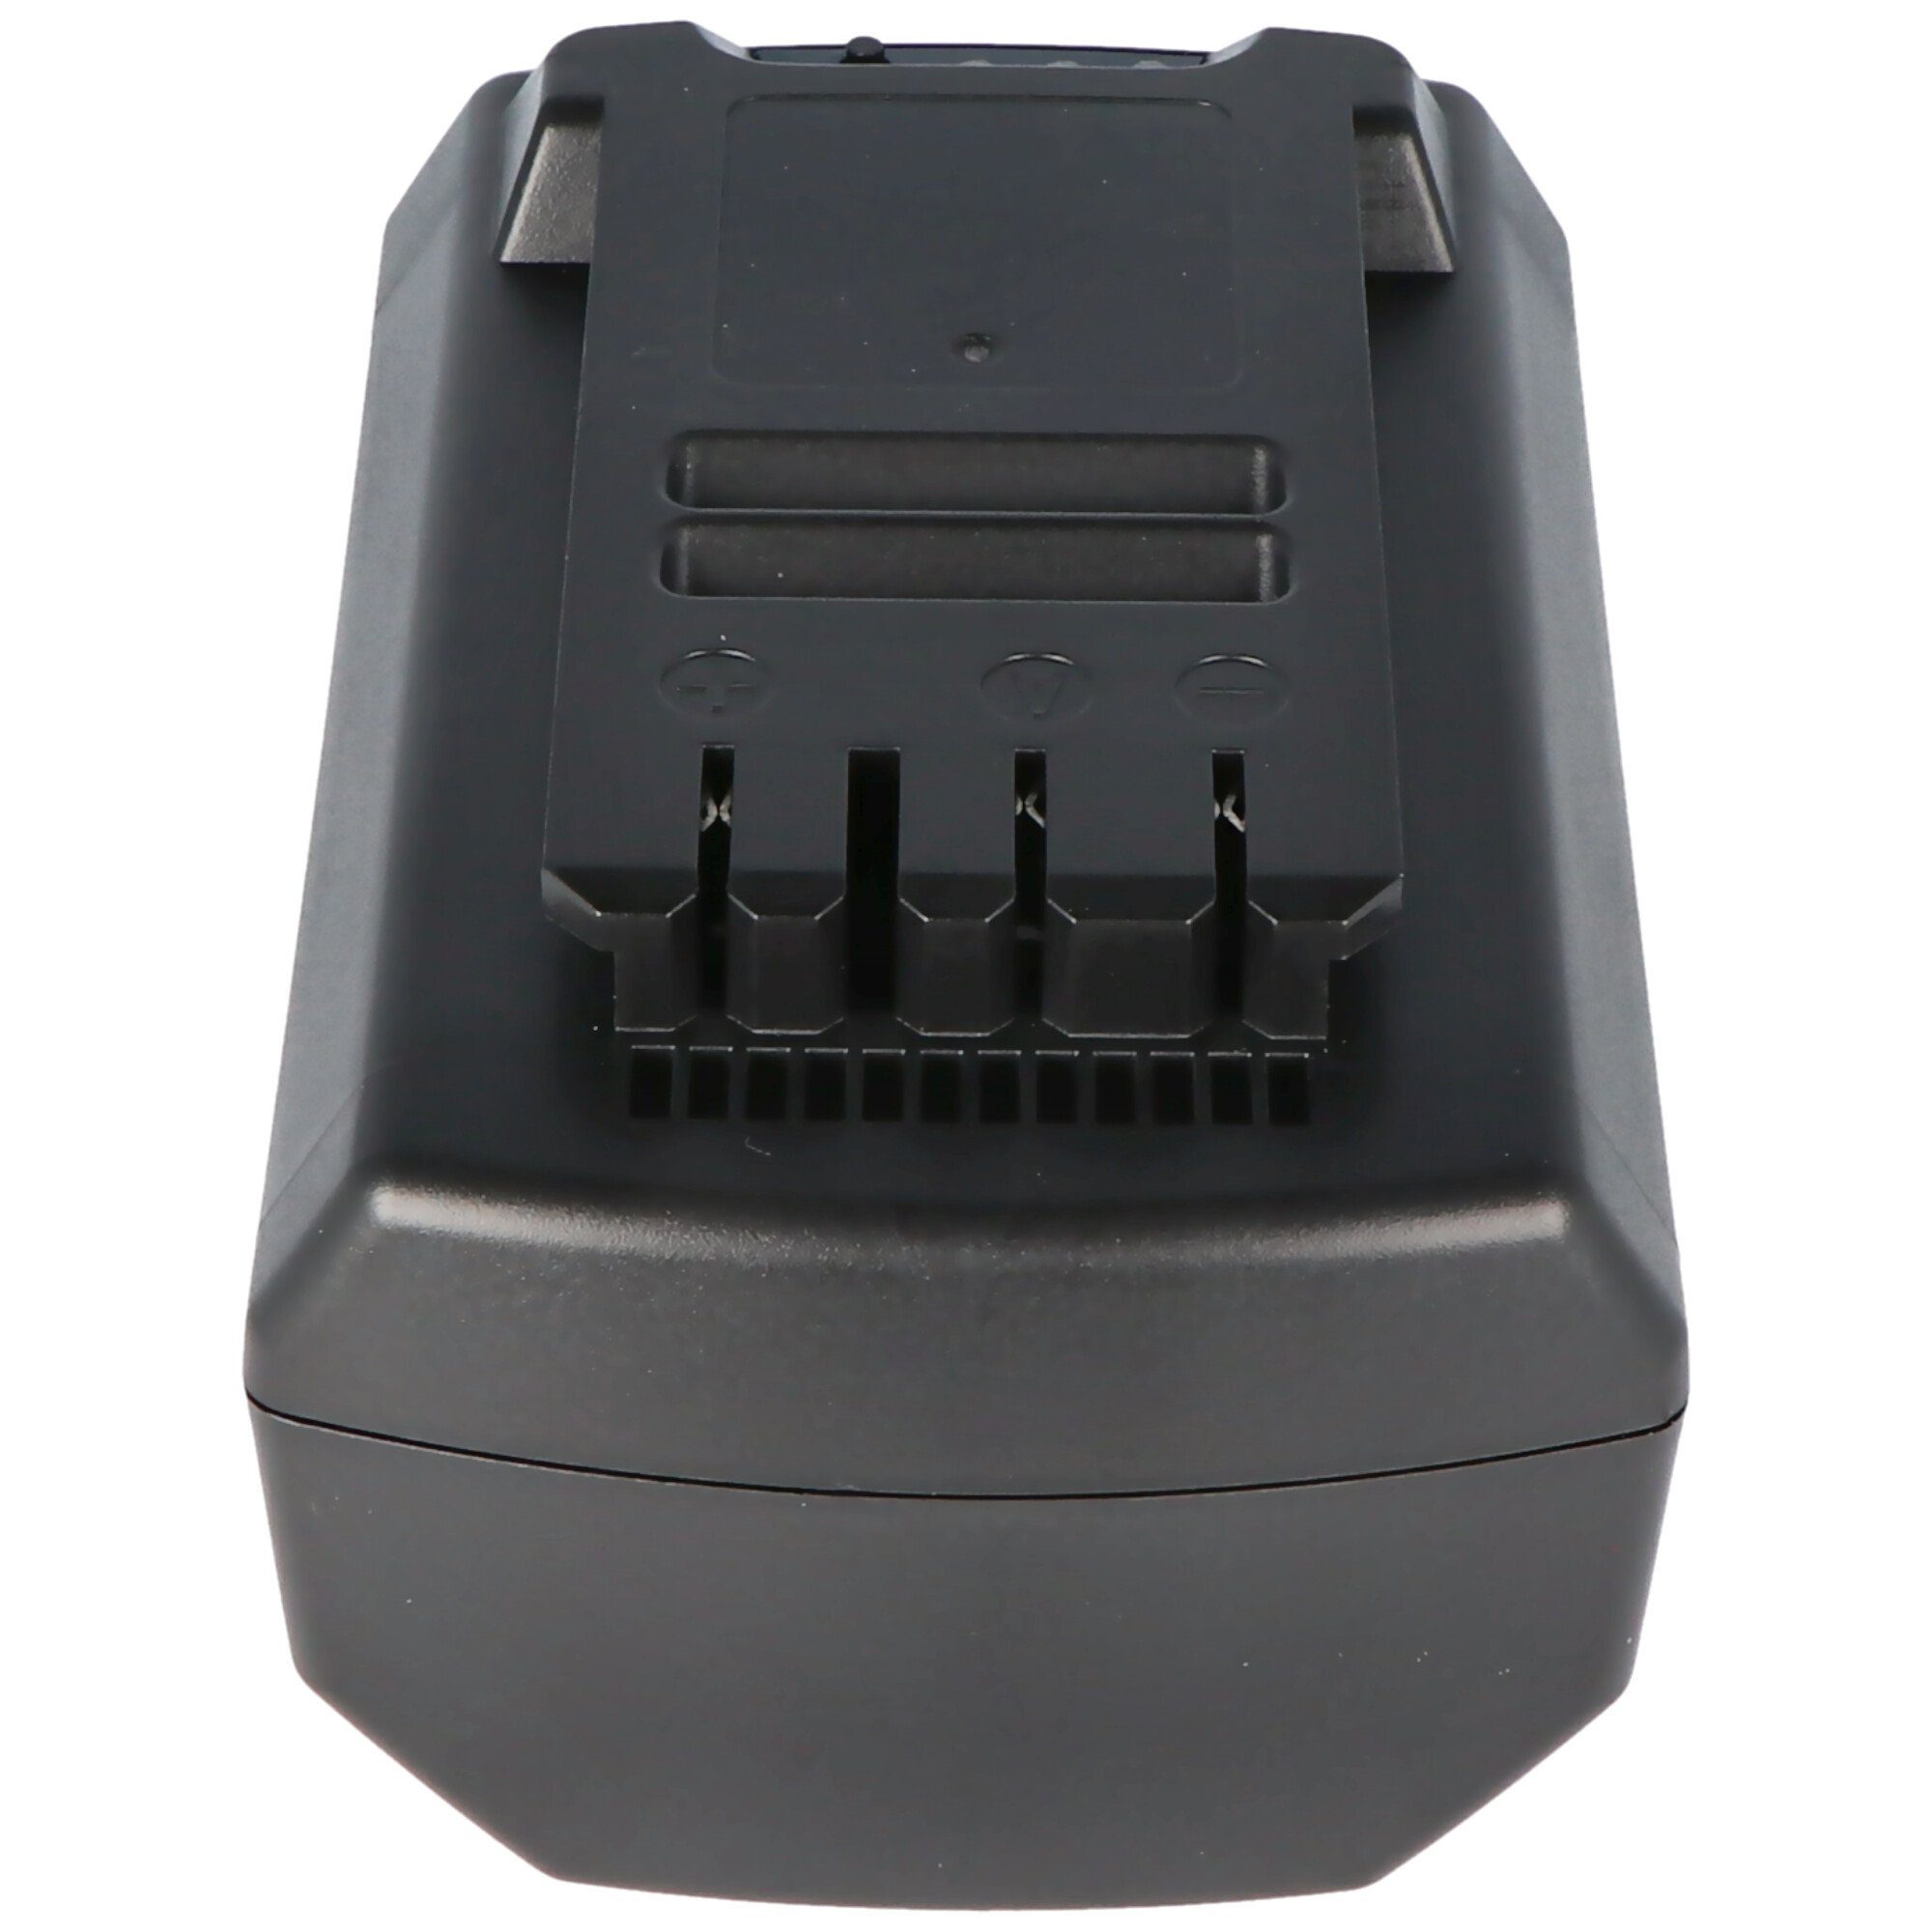 AccuCell 36 Volt Akku mit 5000mAh Kapazität passend für Güde Gartengeräte, Güd Akku 5000 mAh (36,0 V) | Akkus und PowerBanks